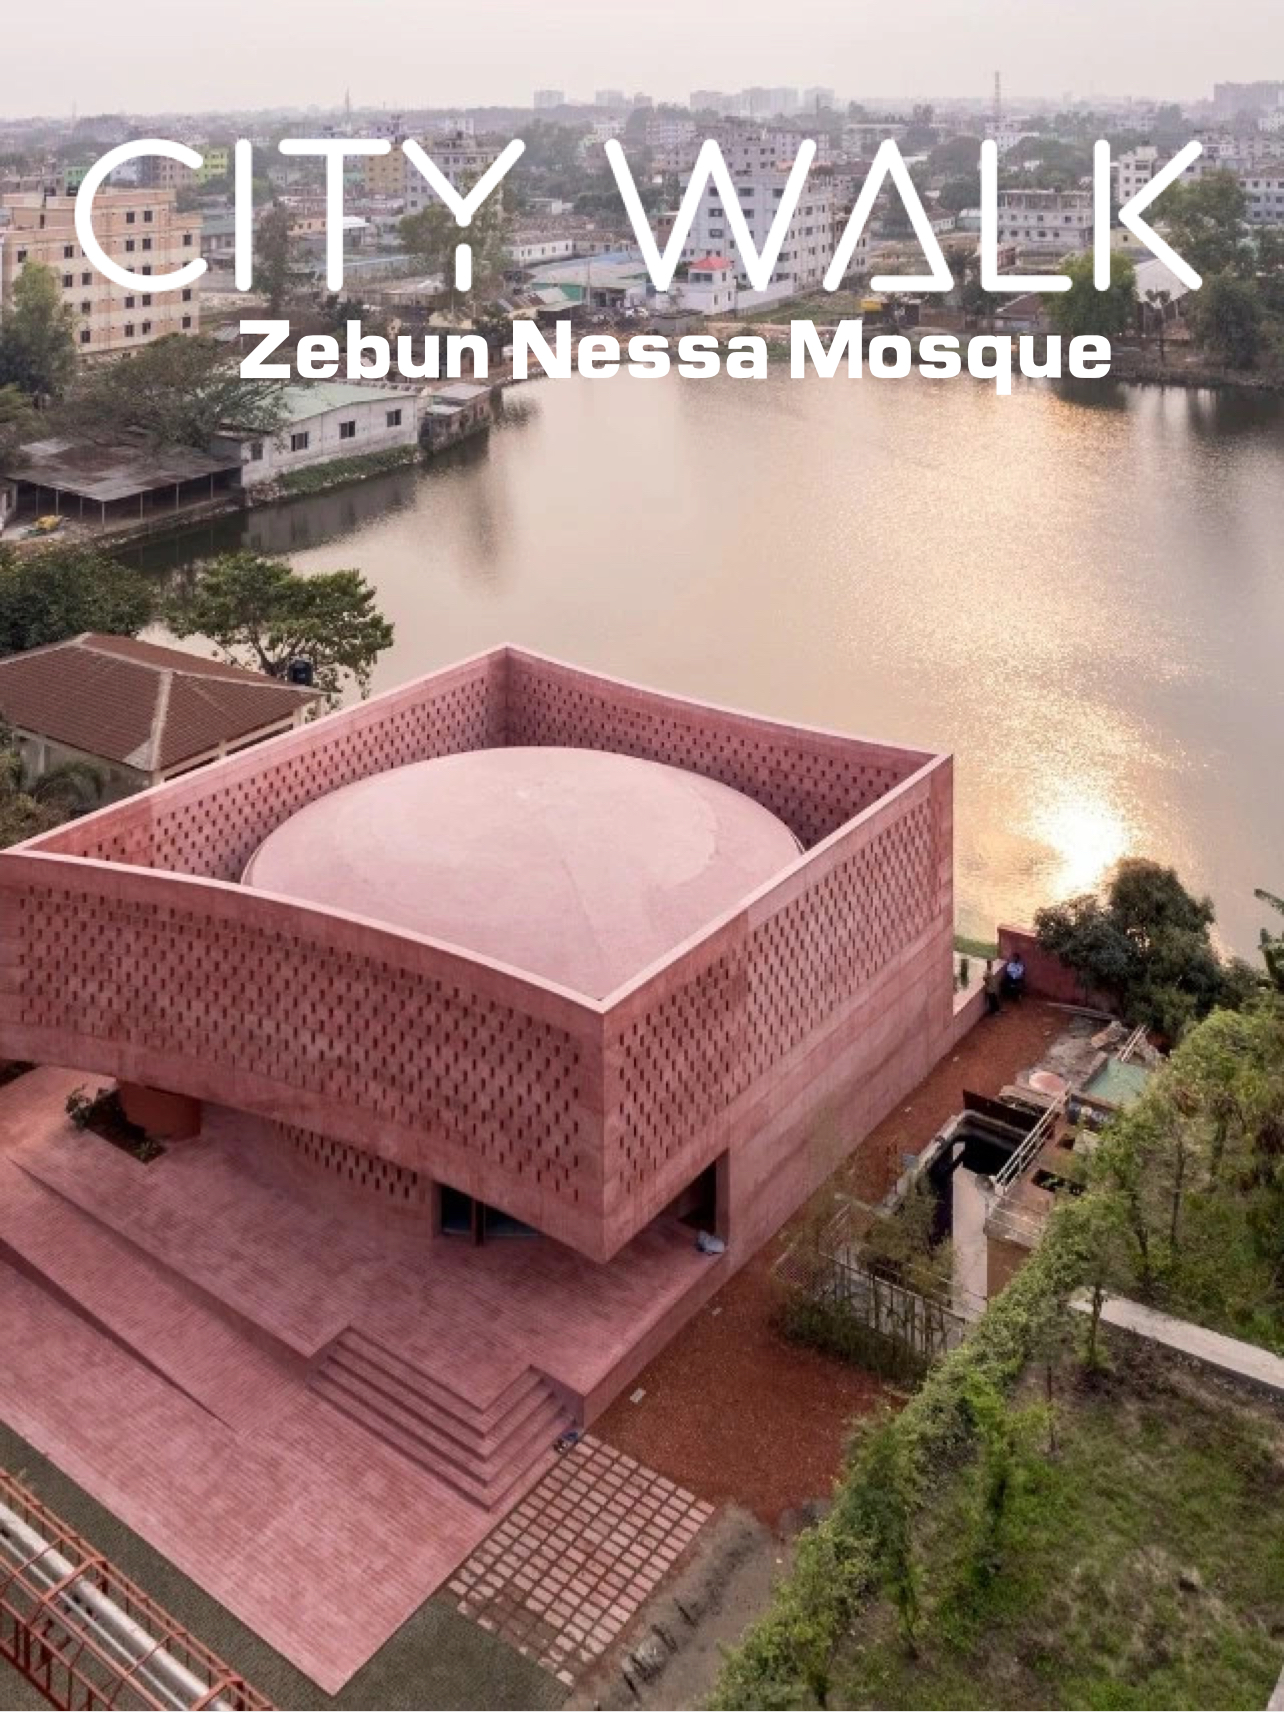 Zebun Nessa Mosque